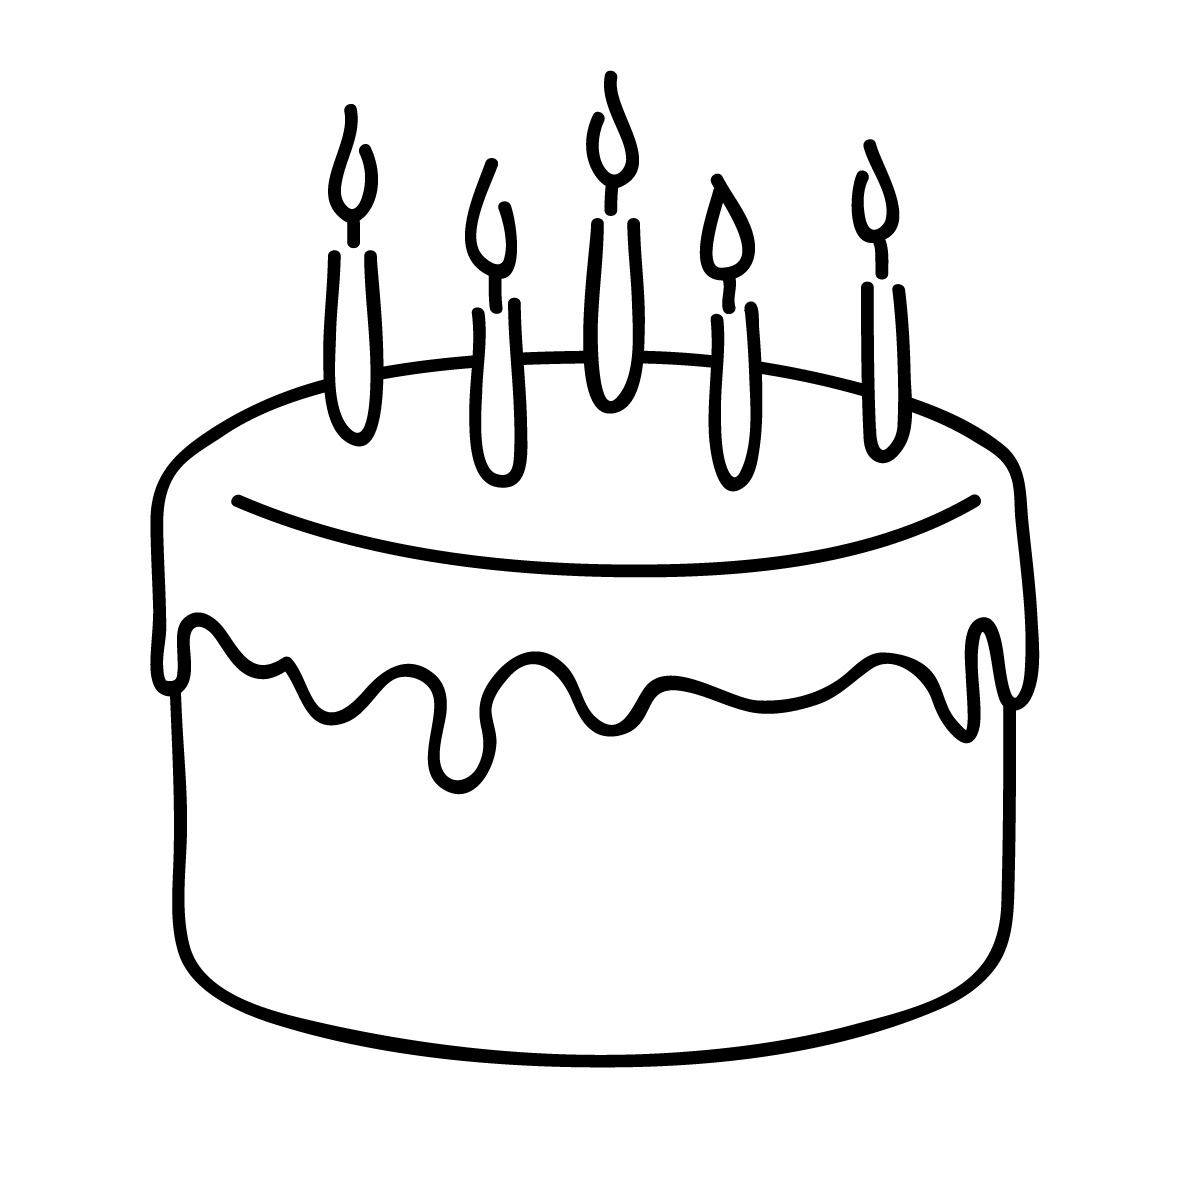 Animated Happy Happy Birthday Clip Art Free Images Birthday Cake Clip Art Happy Birthday Idea Image